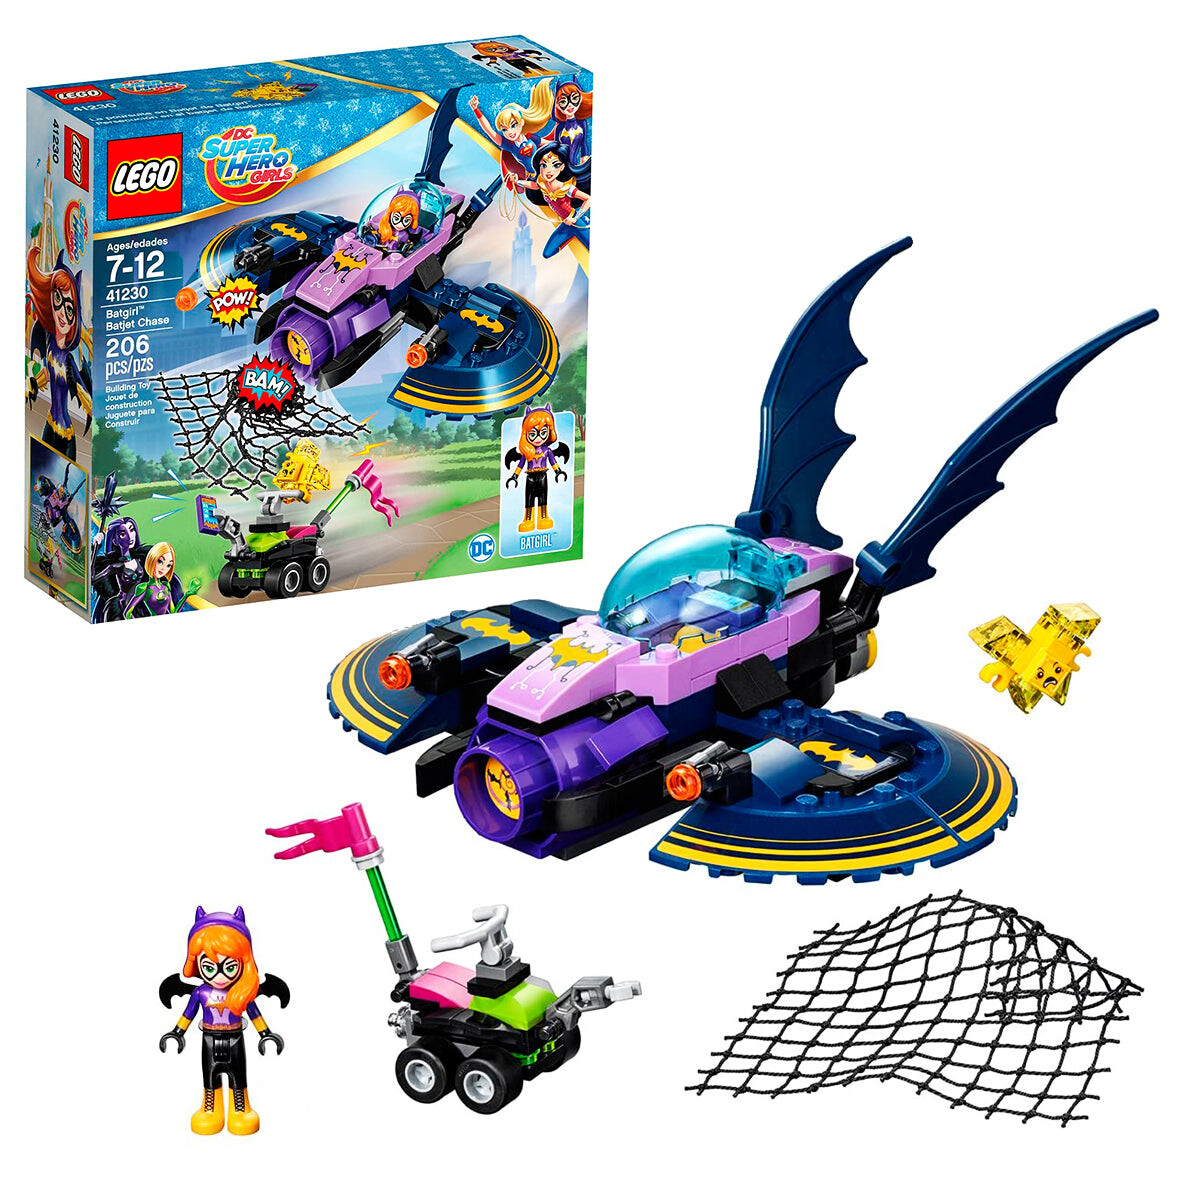 Lego Dc Super Hero Girls Batgirl Batjet 41230 206pc 